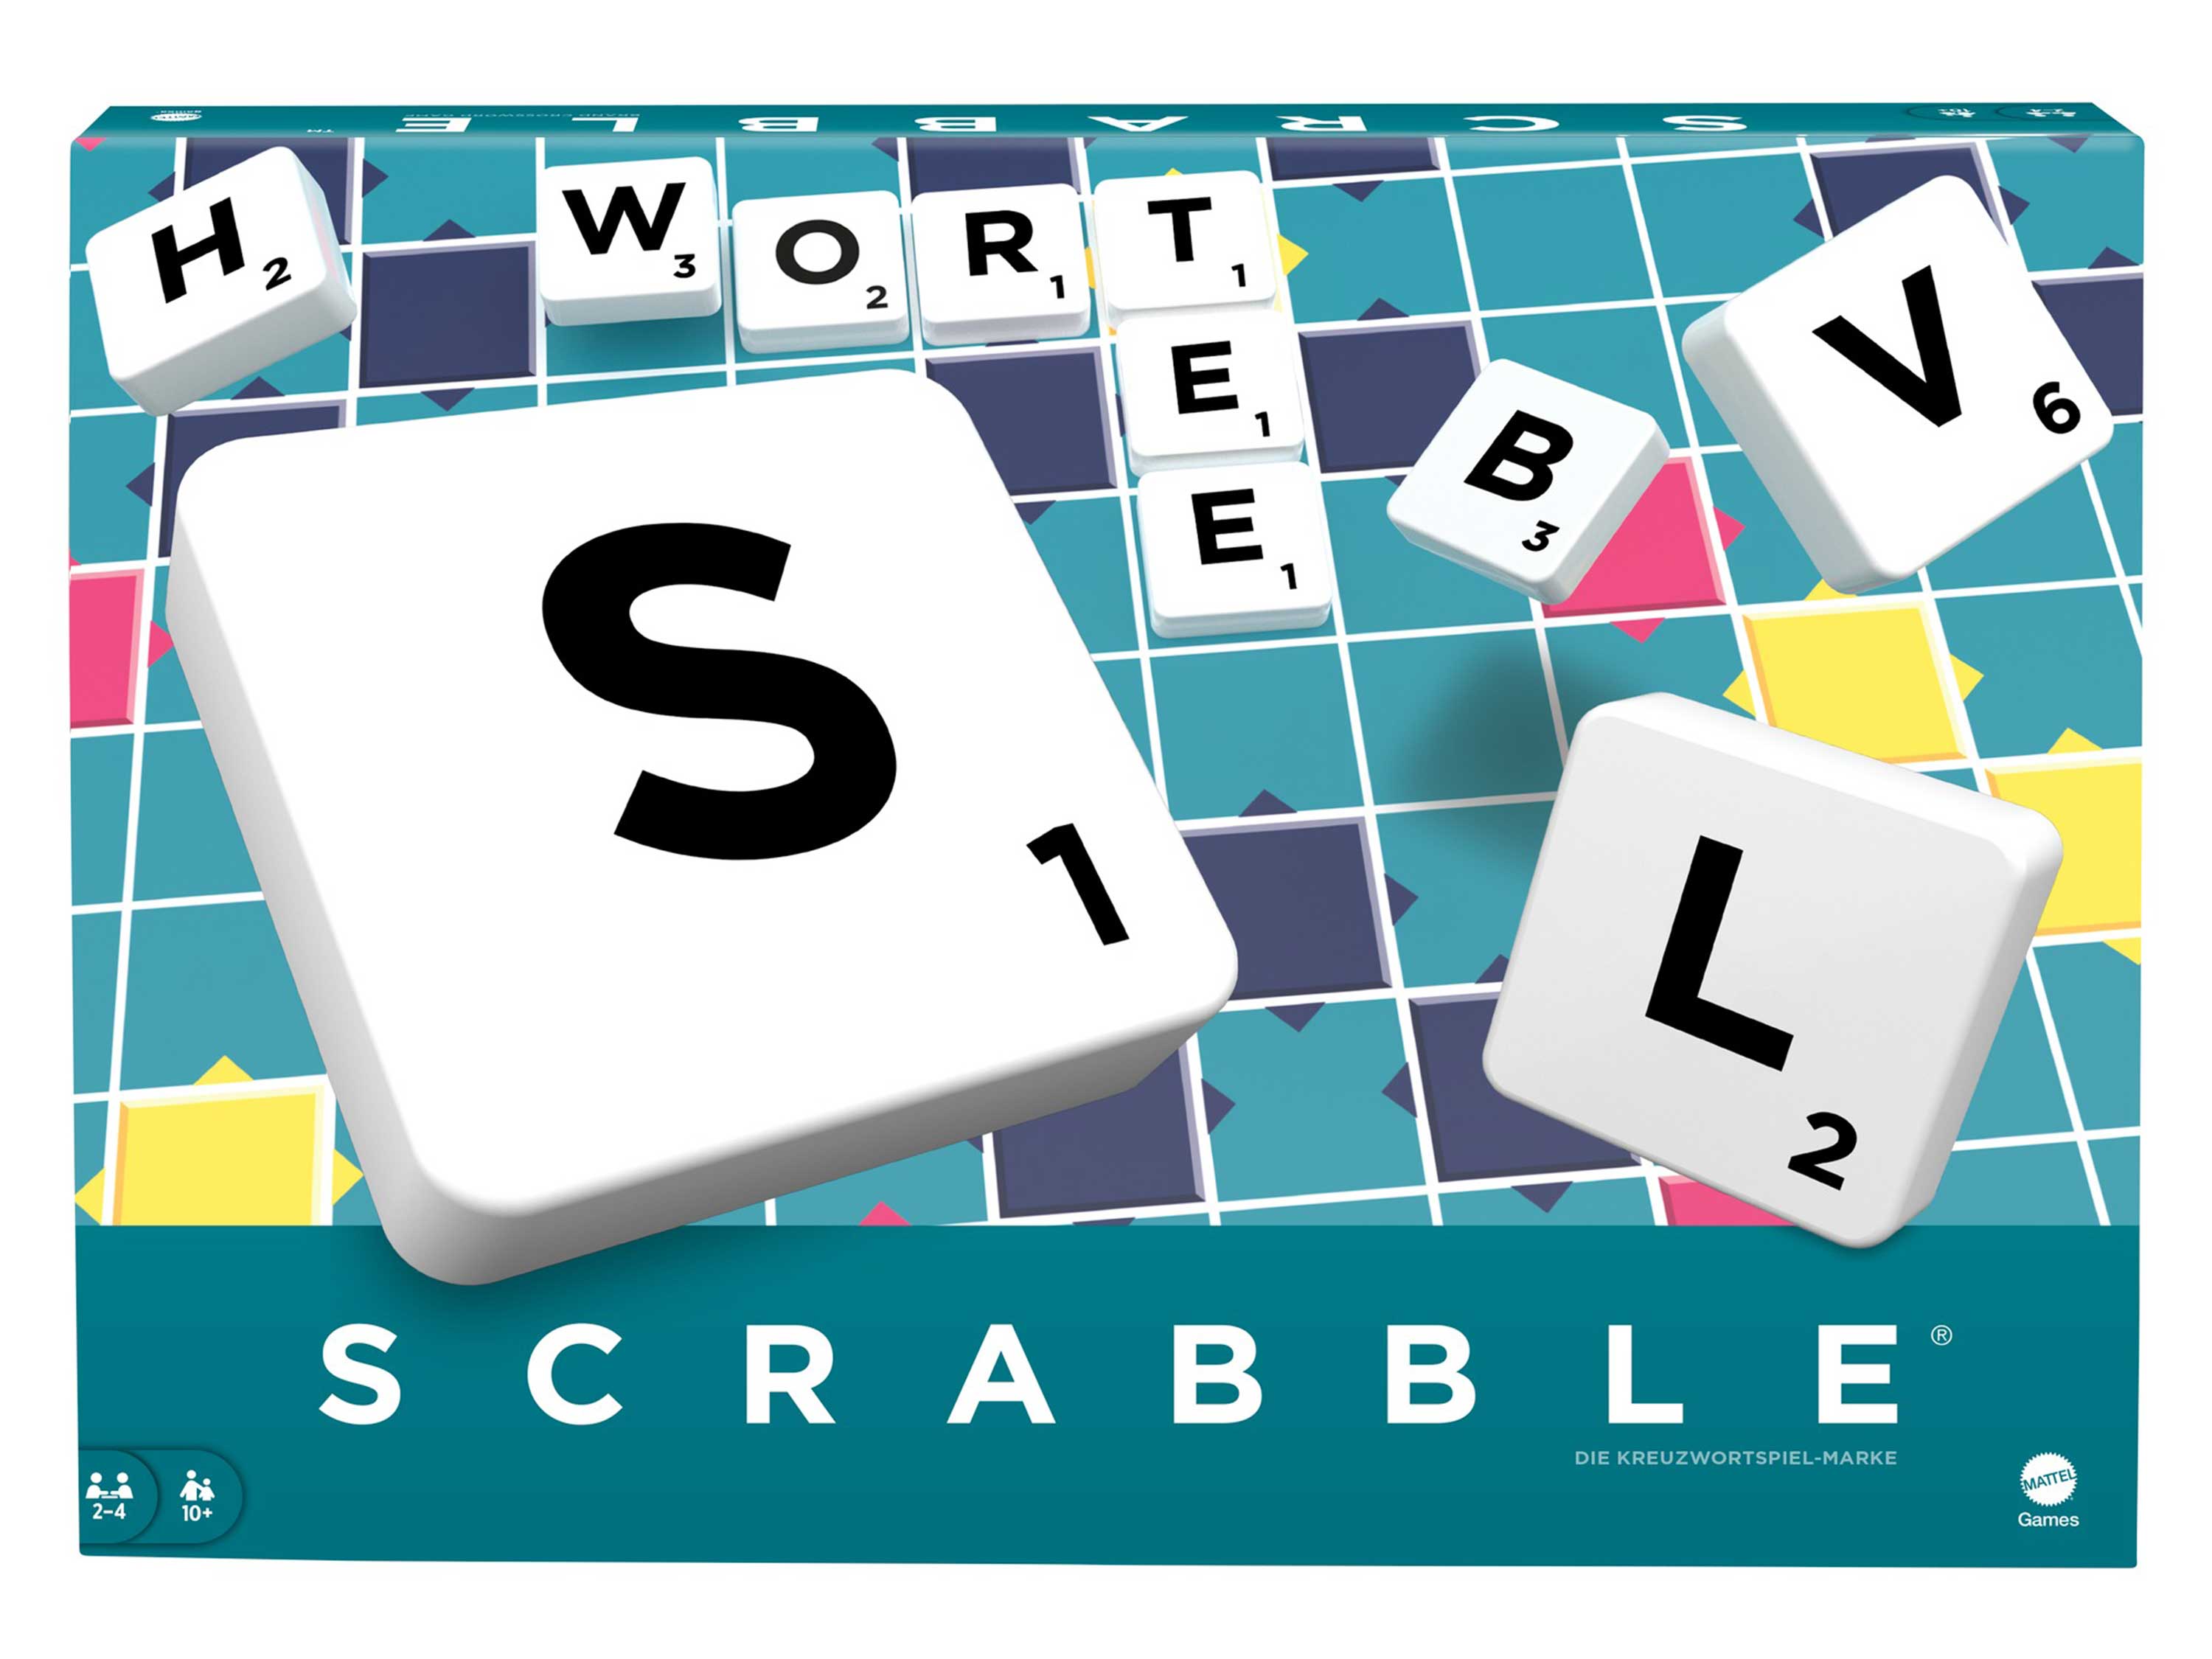 MATTEL Scrabble Original (D)